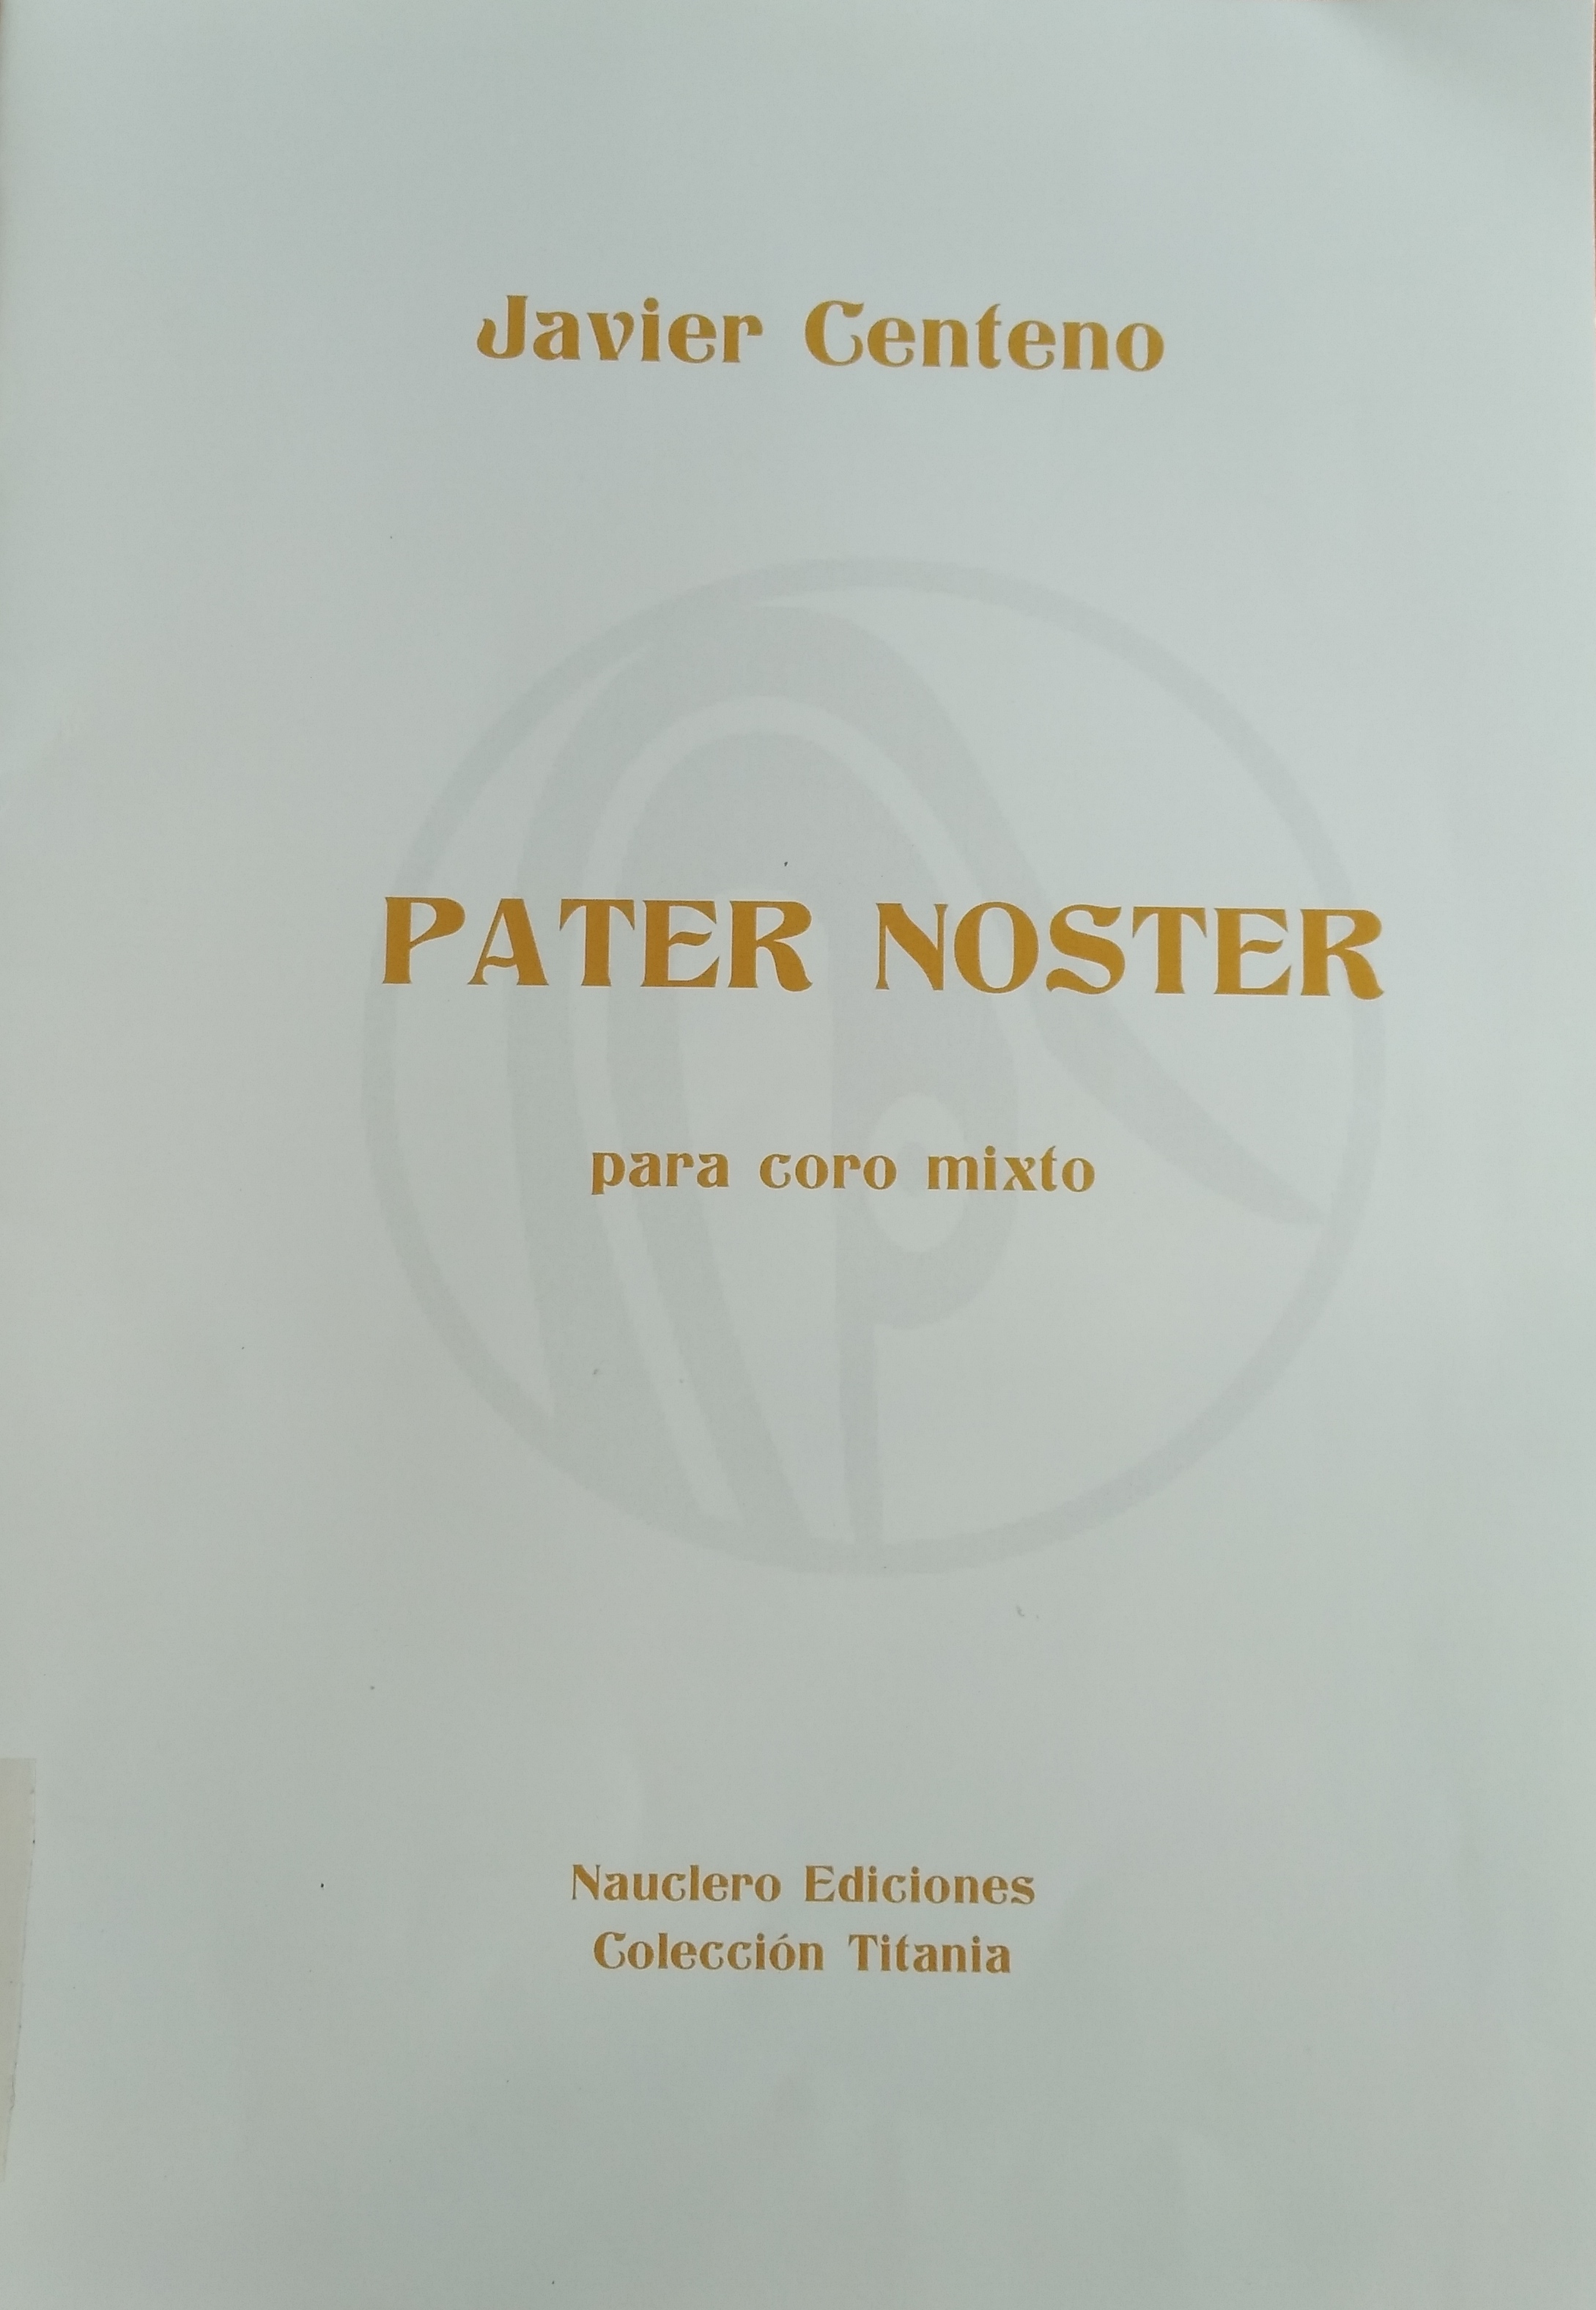 Imagen de portada del libro Pater noster